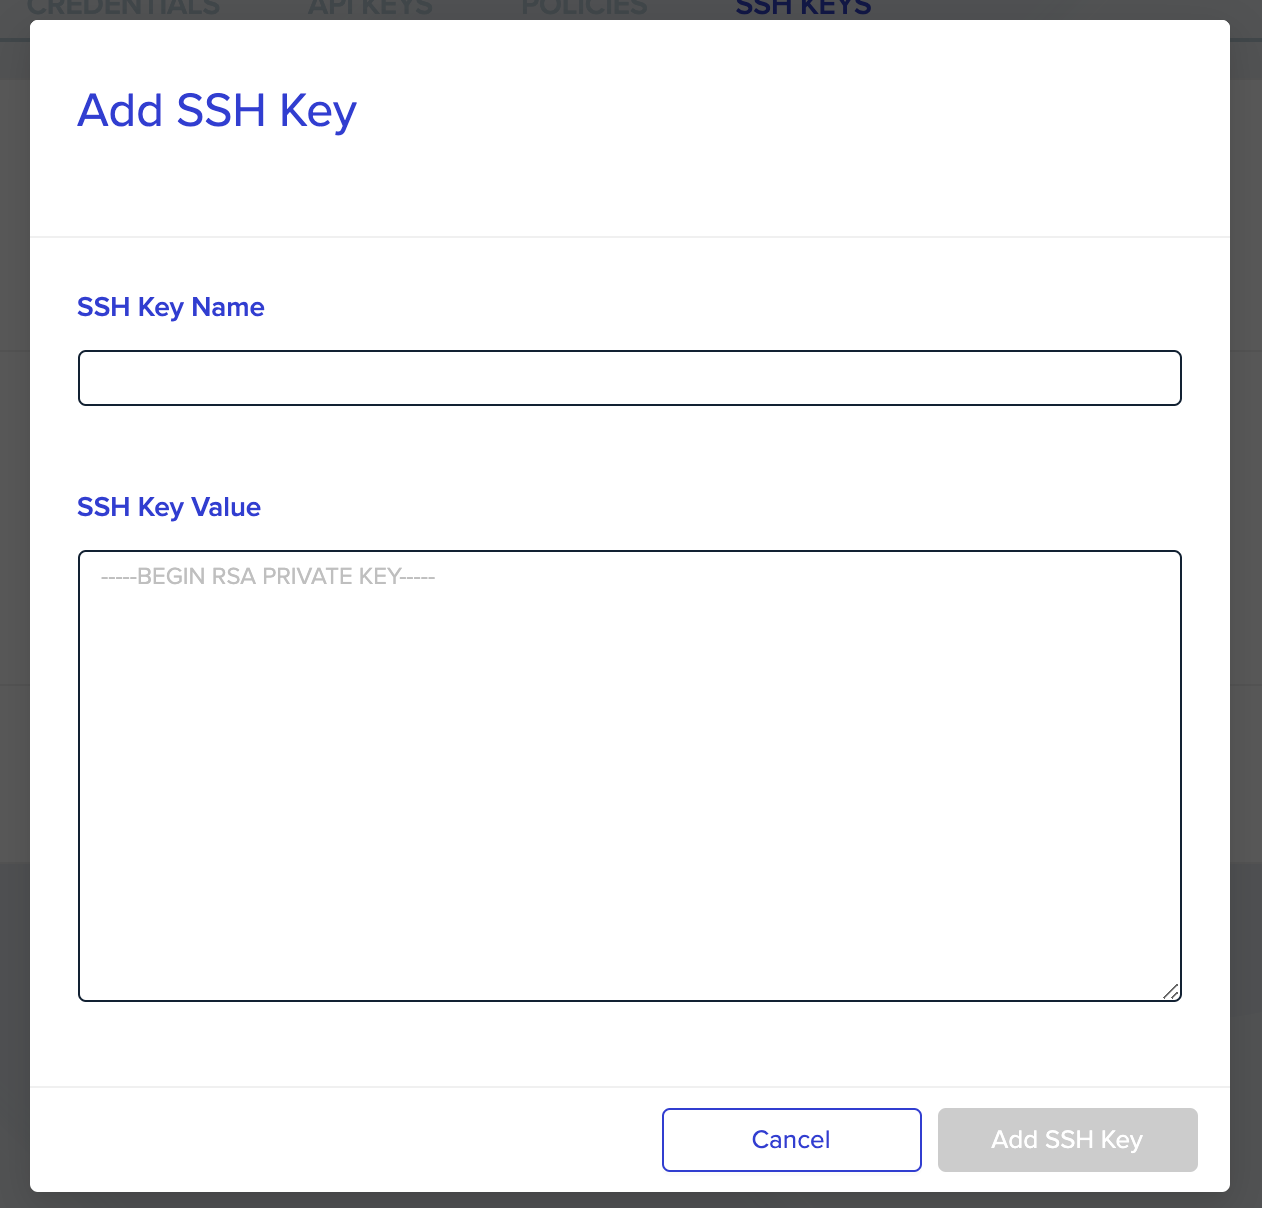 Add new SSH Key Dialog